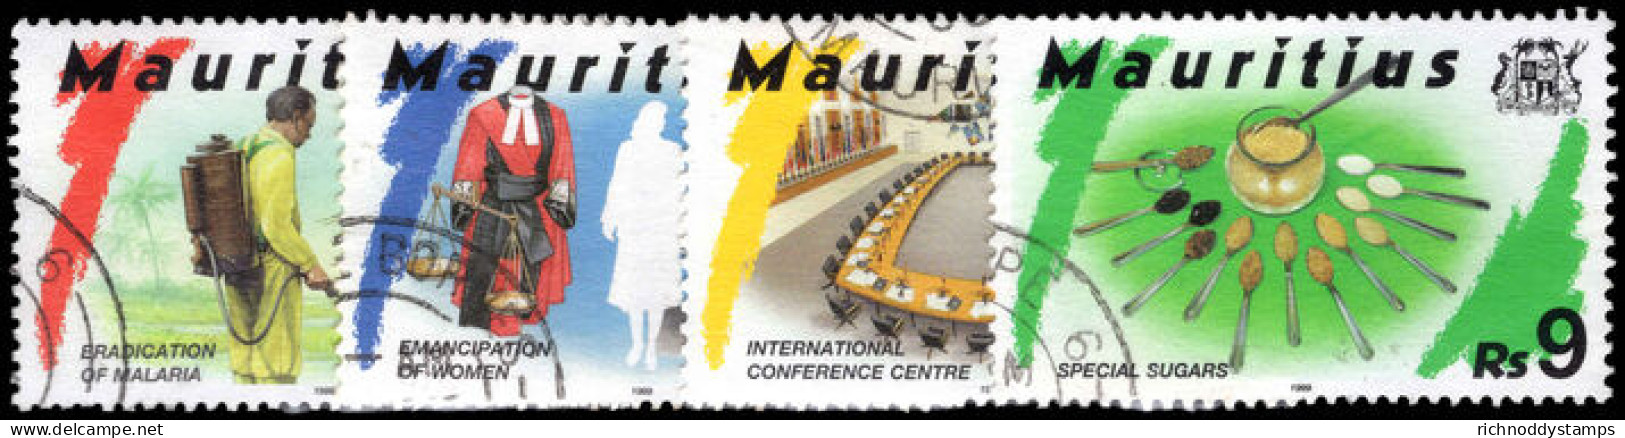 Mauritius 1999 20th Century Acheivements Fine Used. - Mauritius (1968-...)